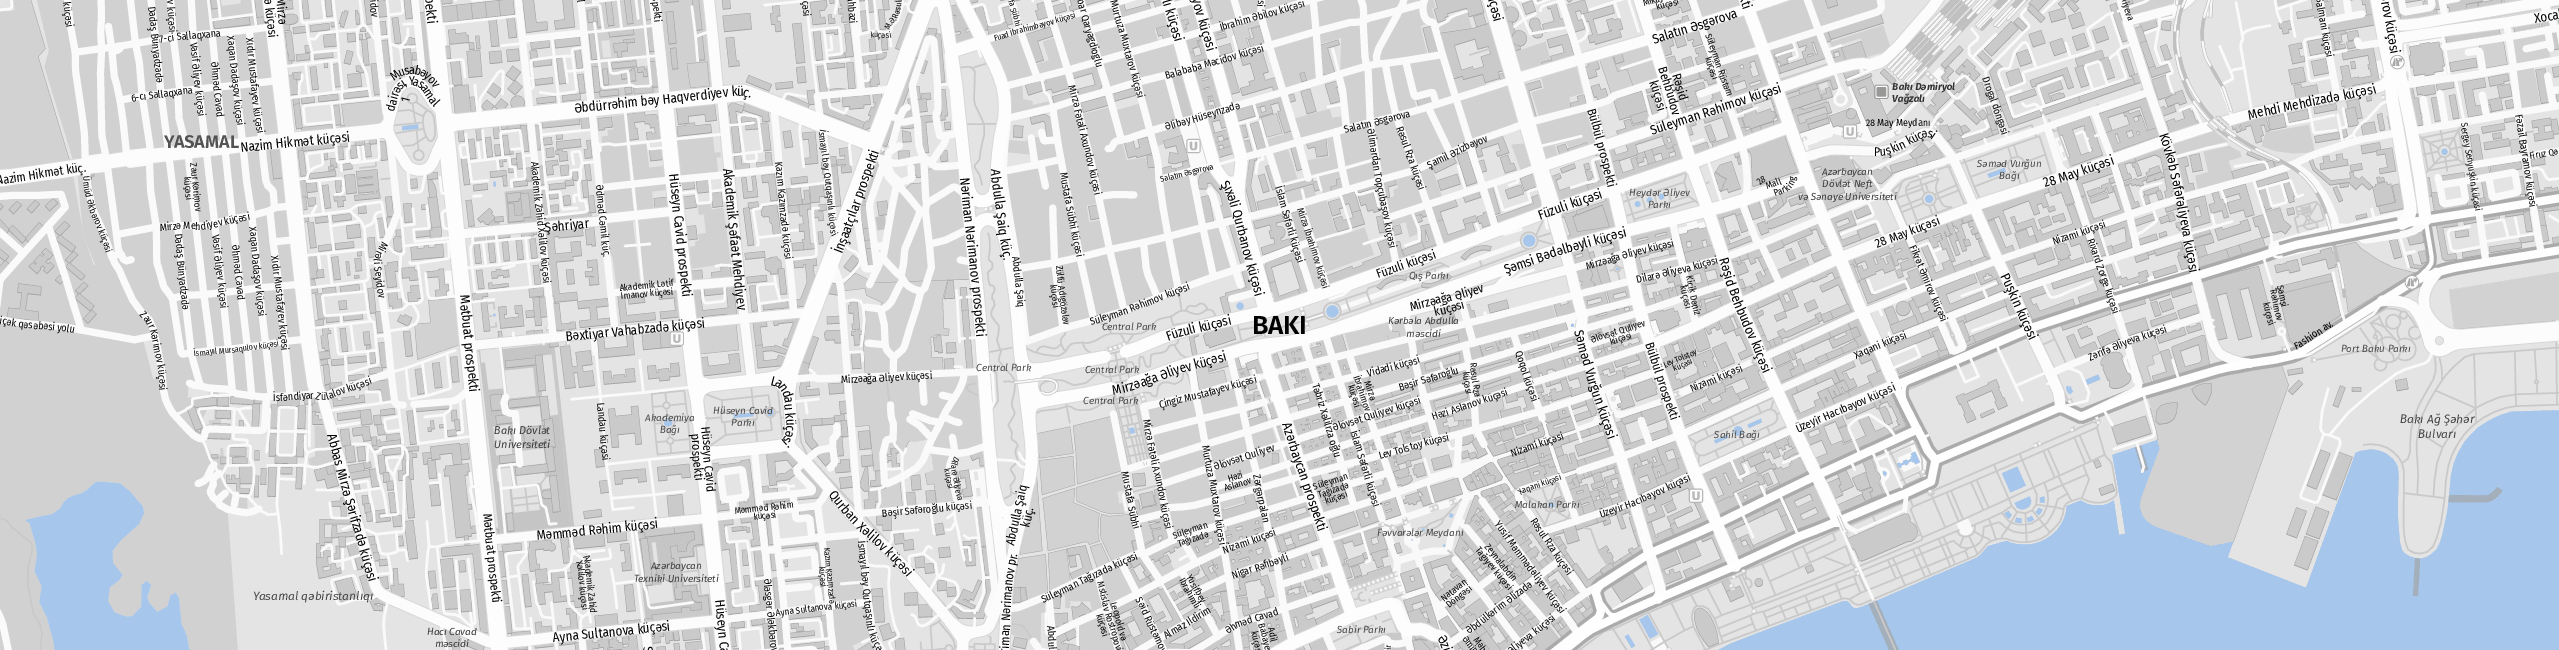 Stadtplan Baku zum Downloaden.